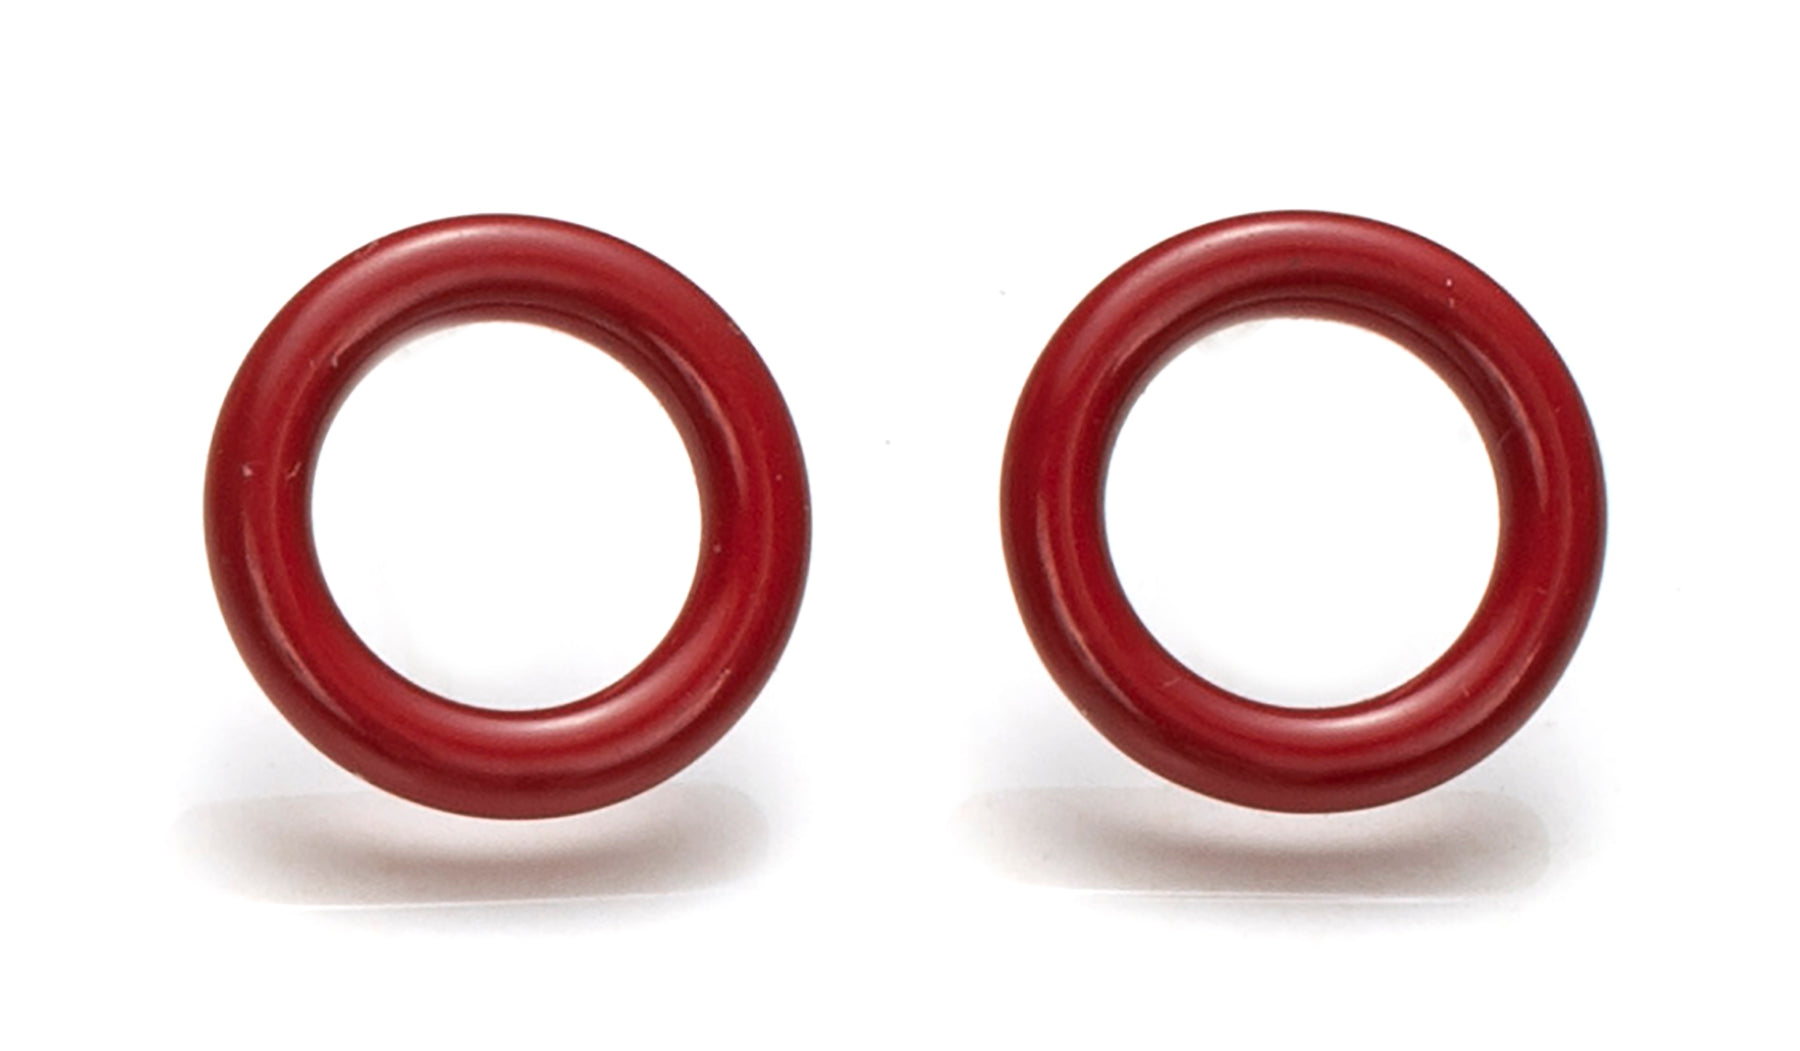 Mini Circle Post Earrings